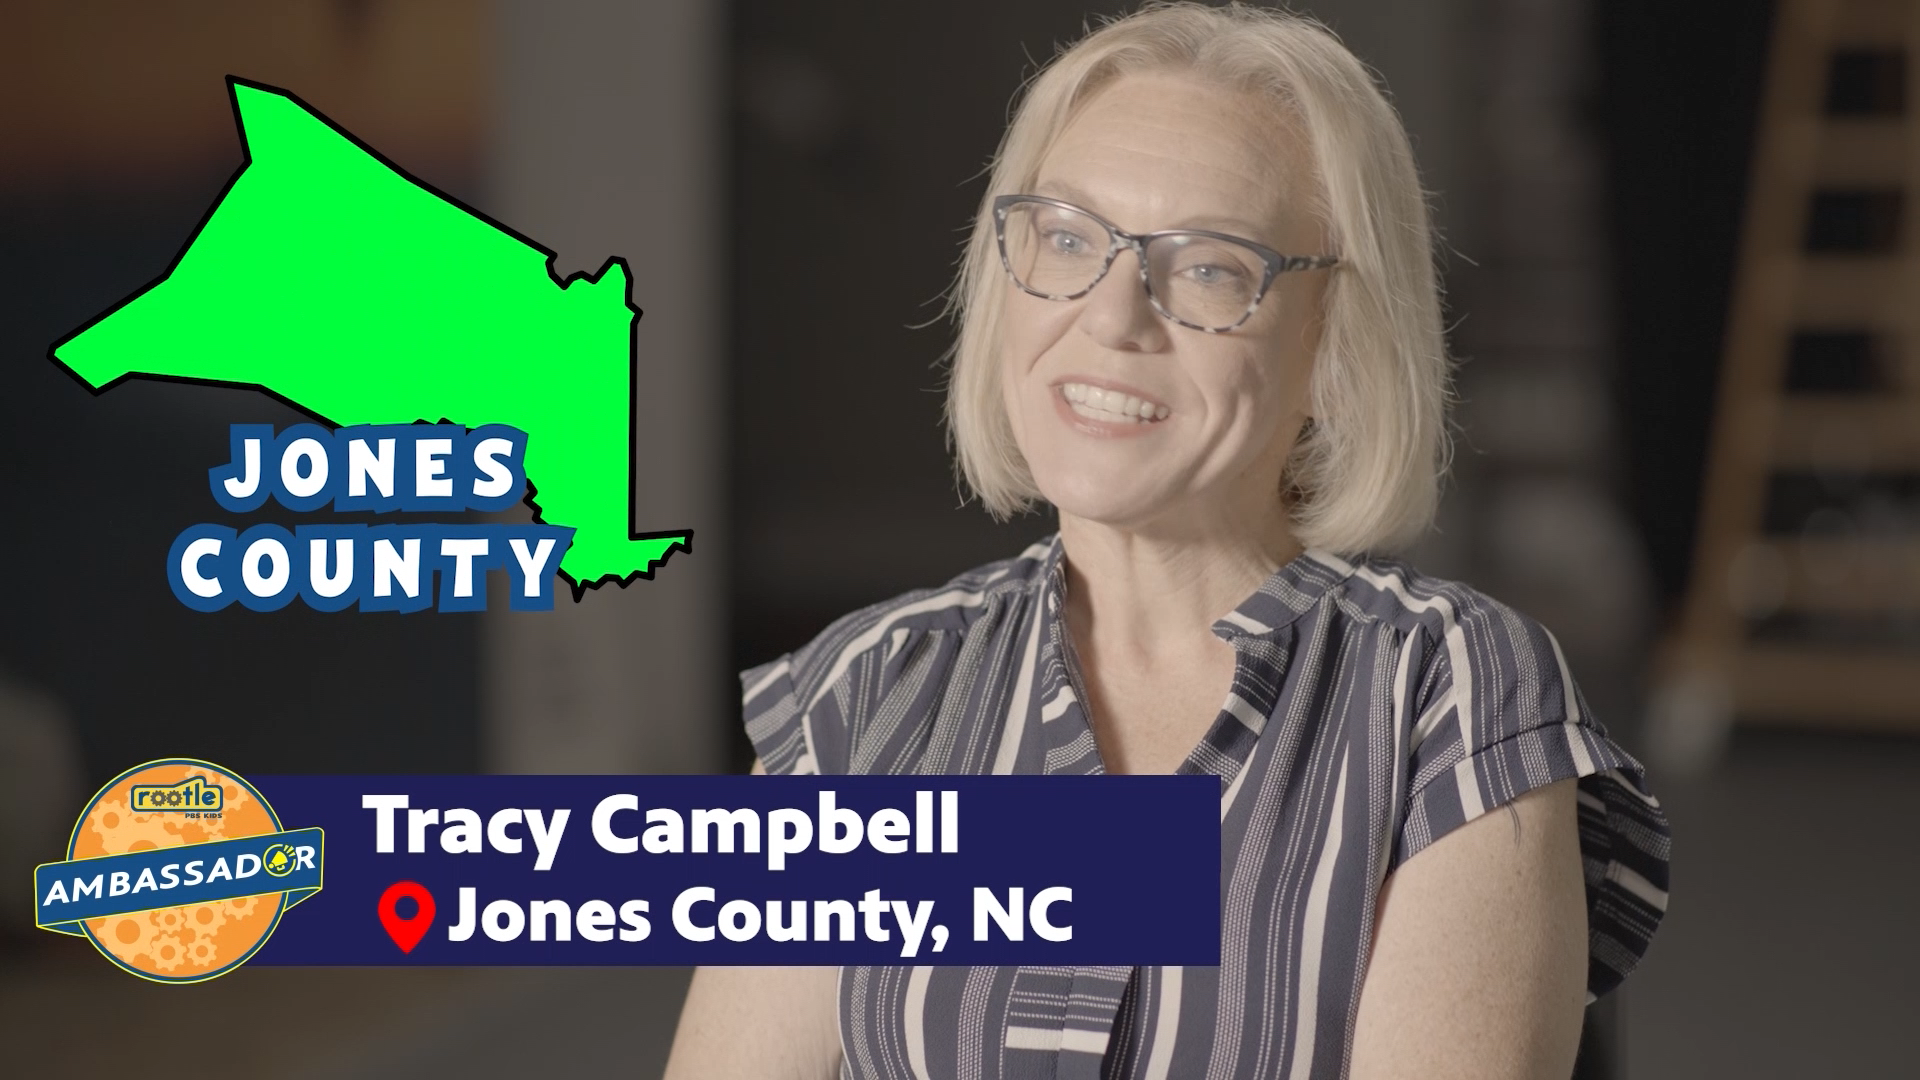 Meet Tracy Campbell, Jones County Rootle Ambassador